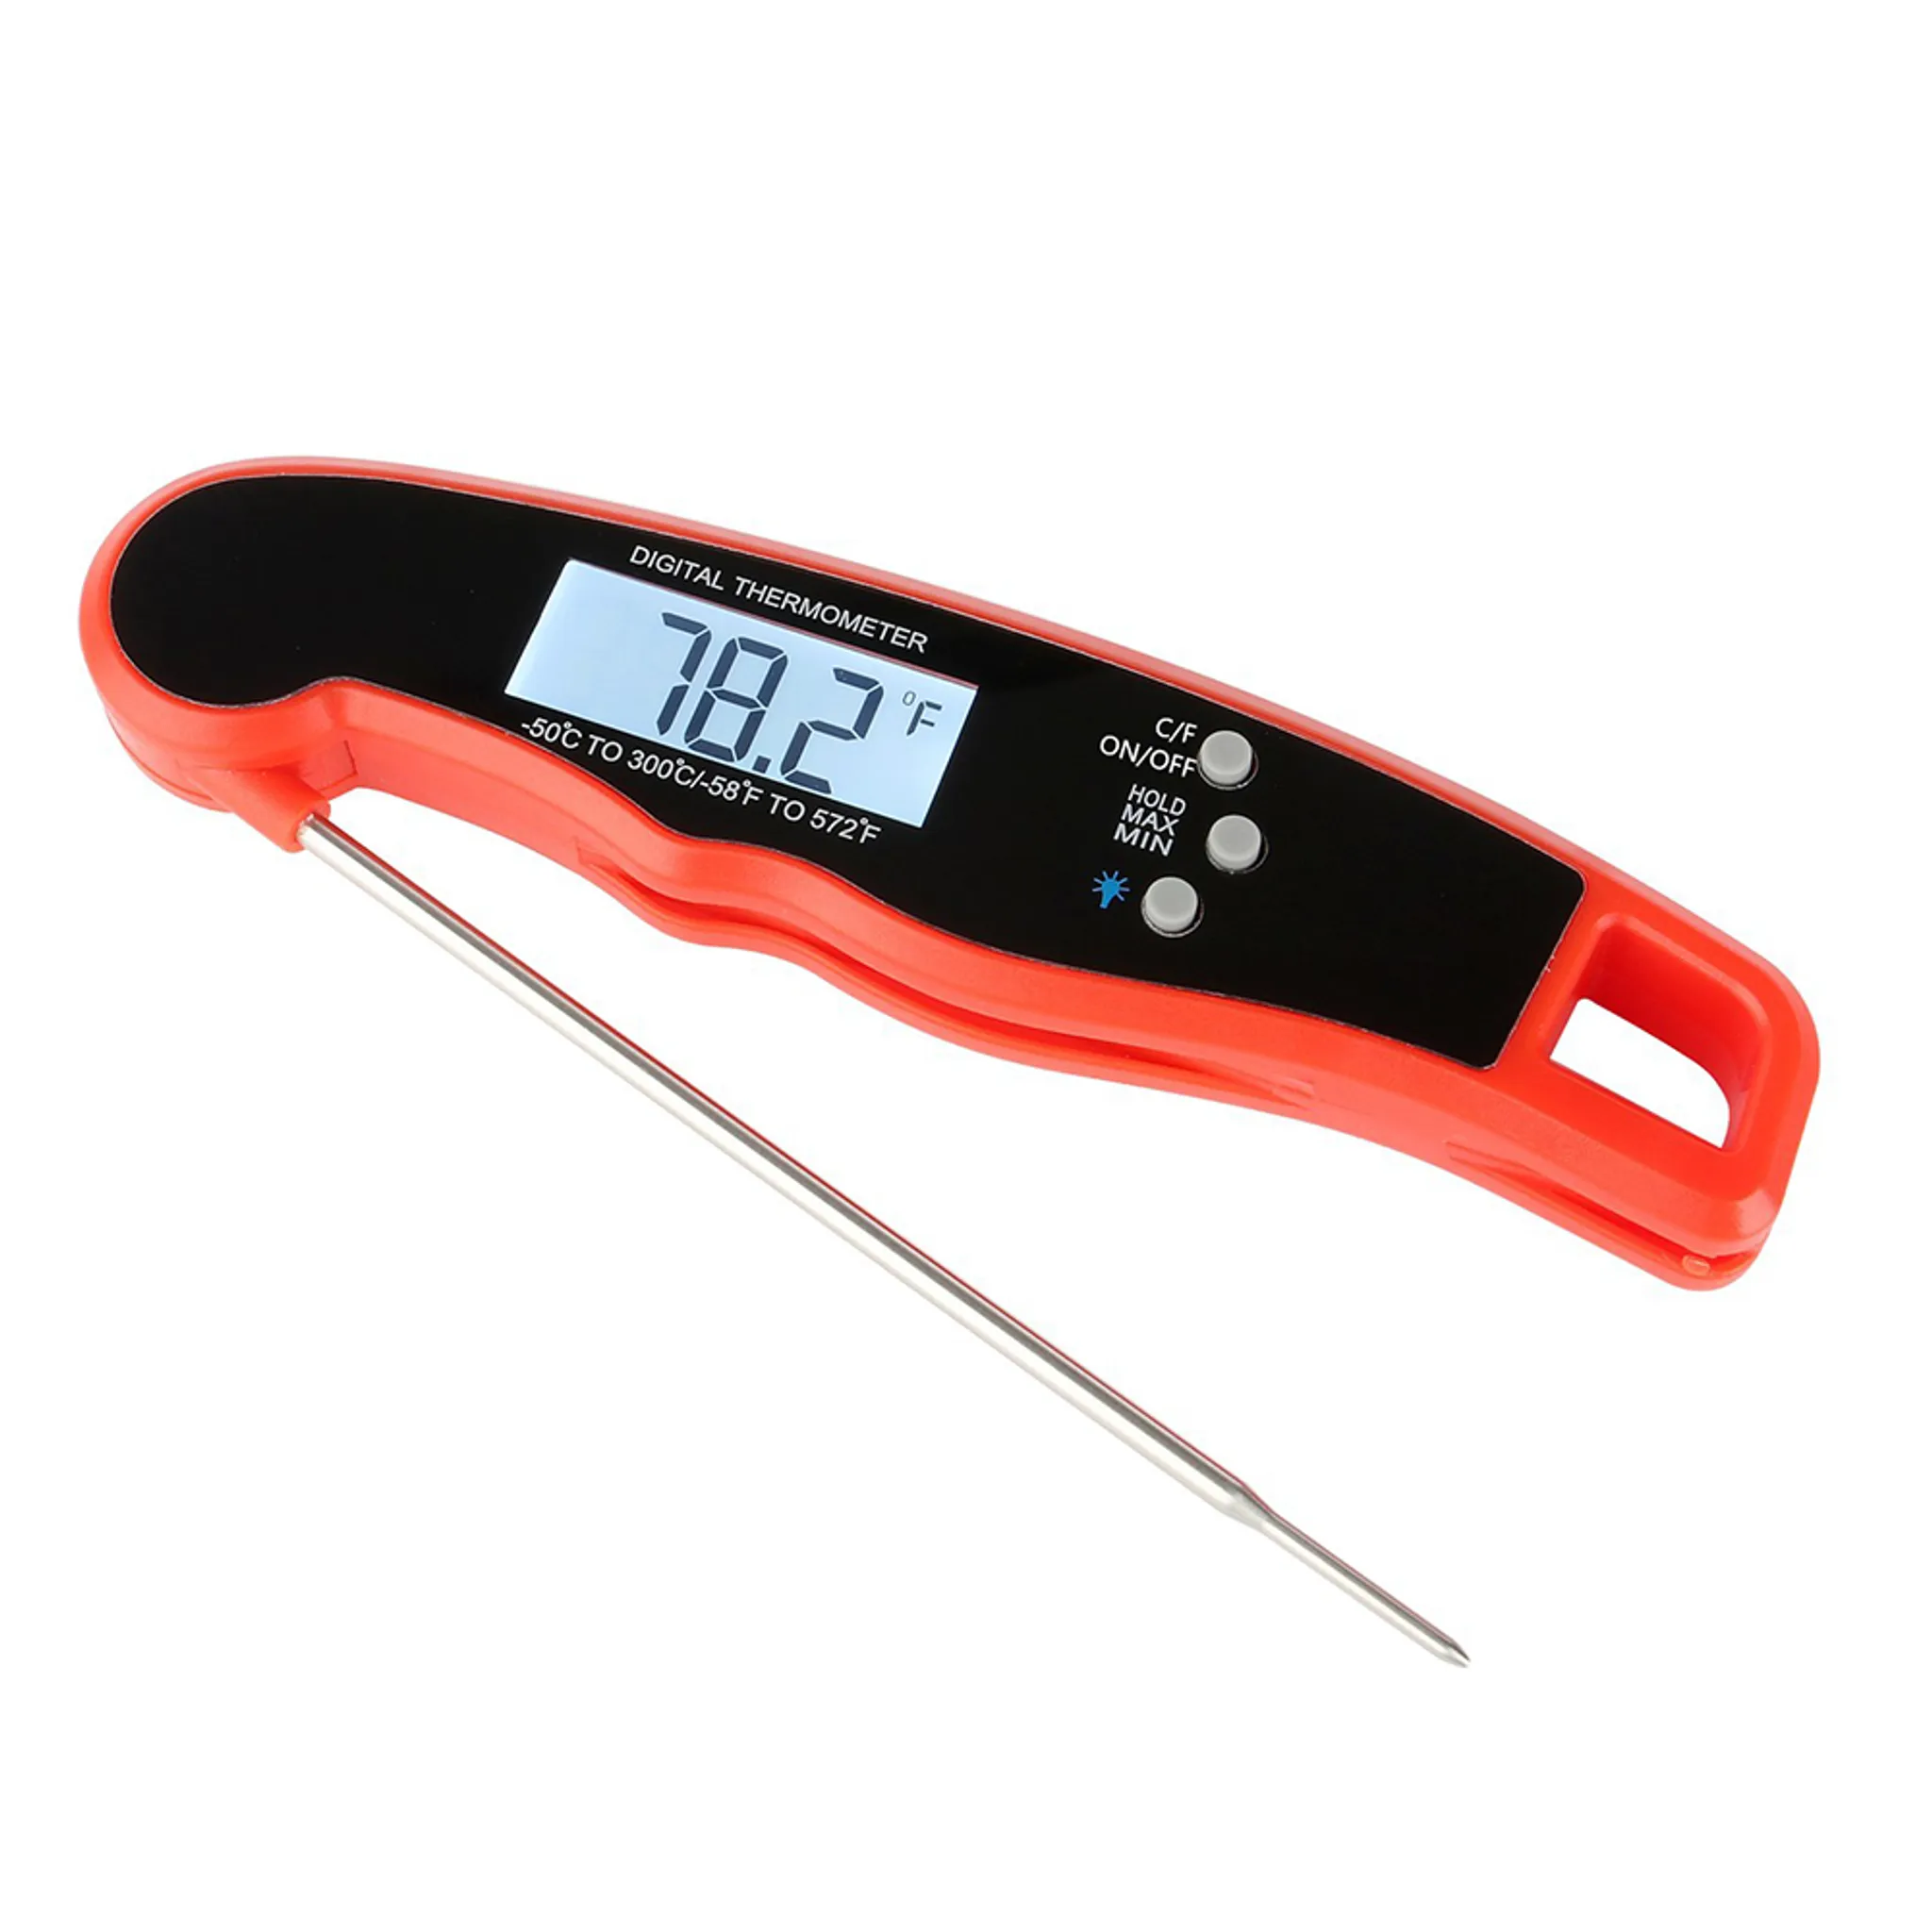 Küchenthermometer Digitales Thermometer mit